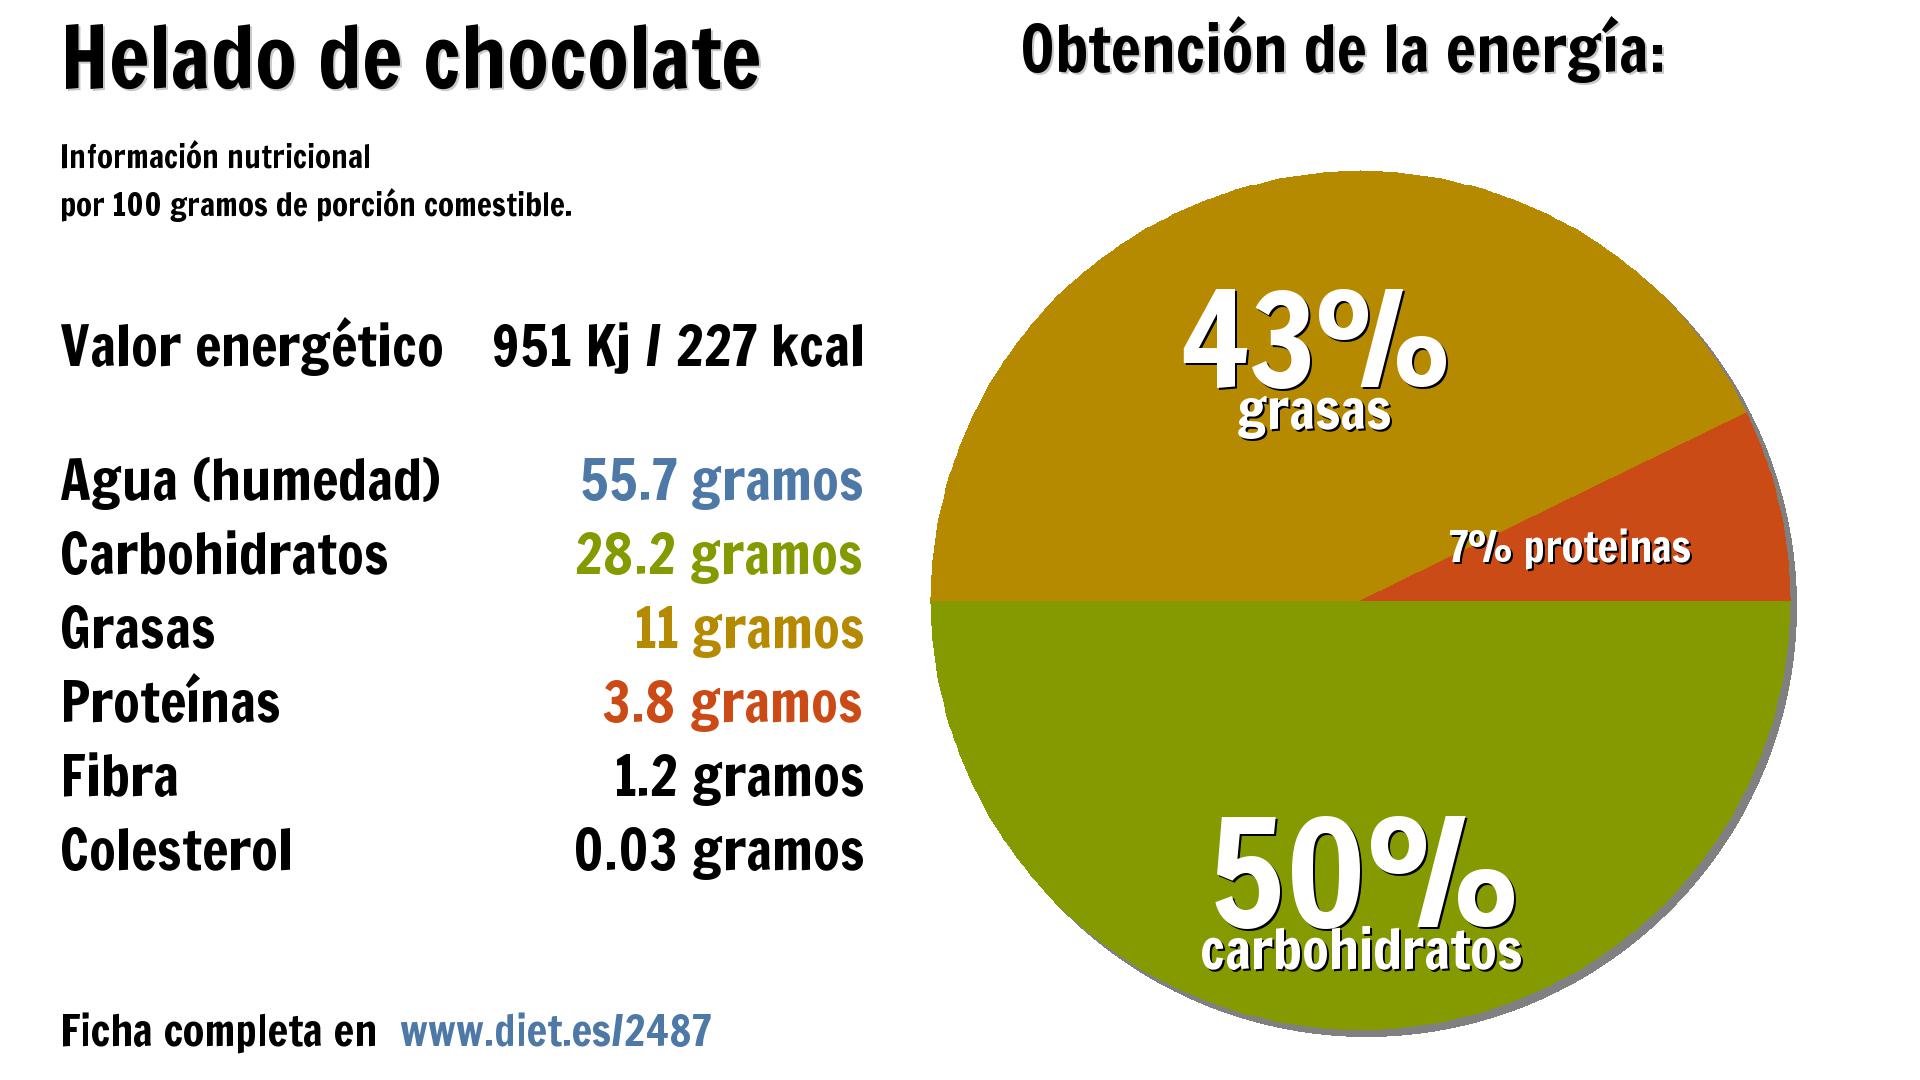 Helado de chocolate: energía 951 Kj, agua 56 g., carbohidratos 28 g., grasas 11 g., proteínas 4 g. y fibra 1 g.